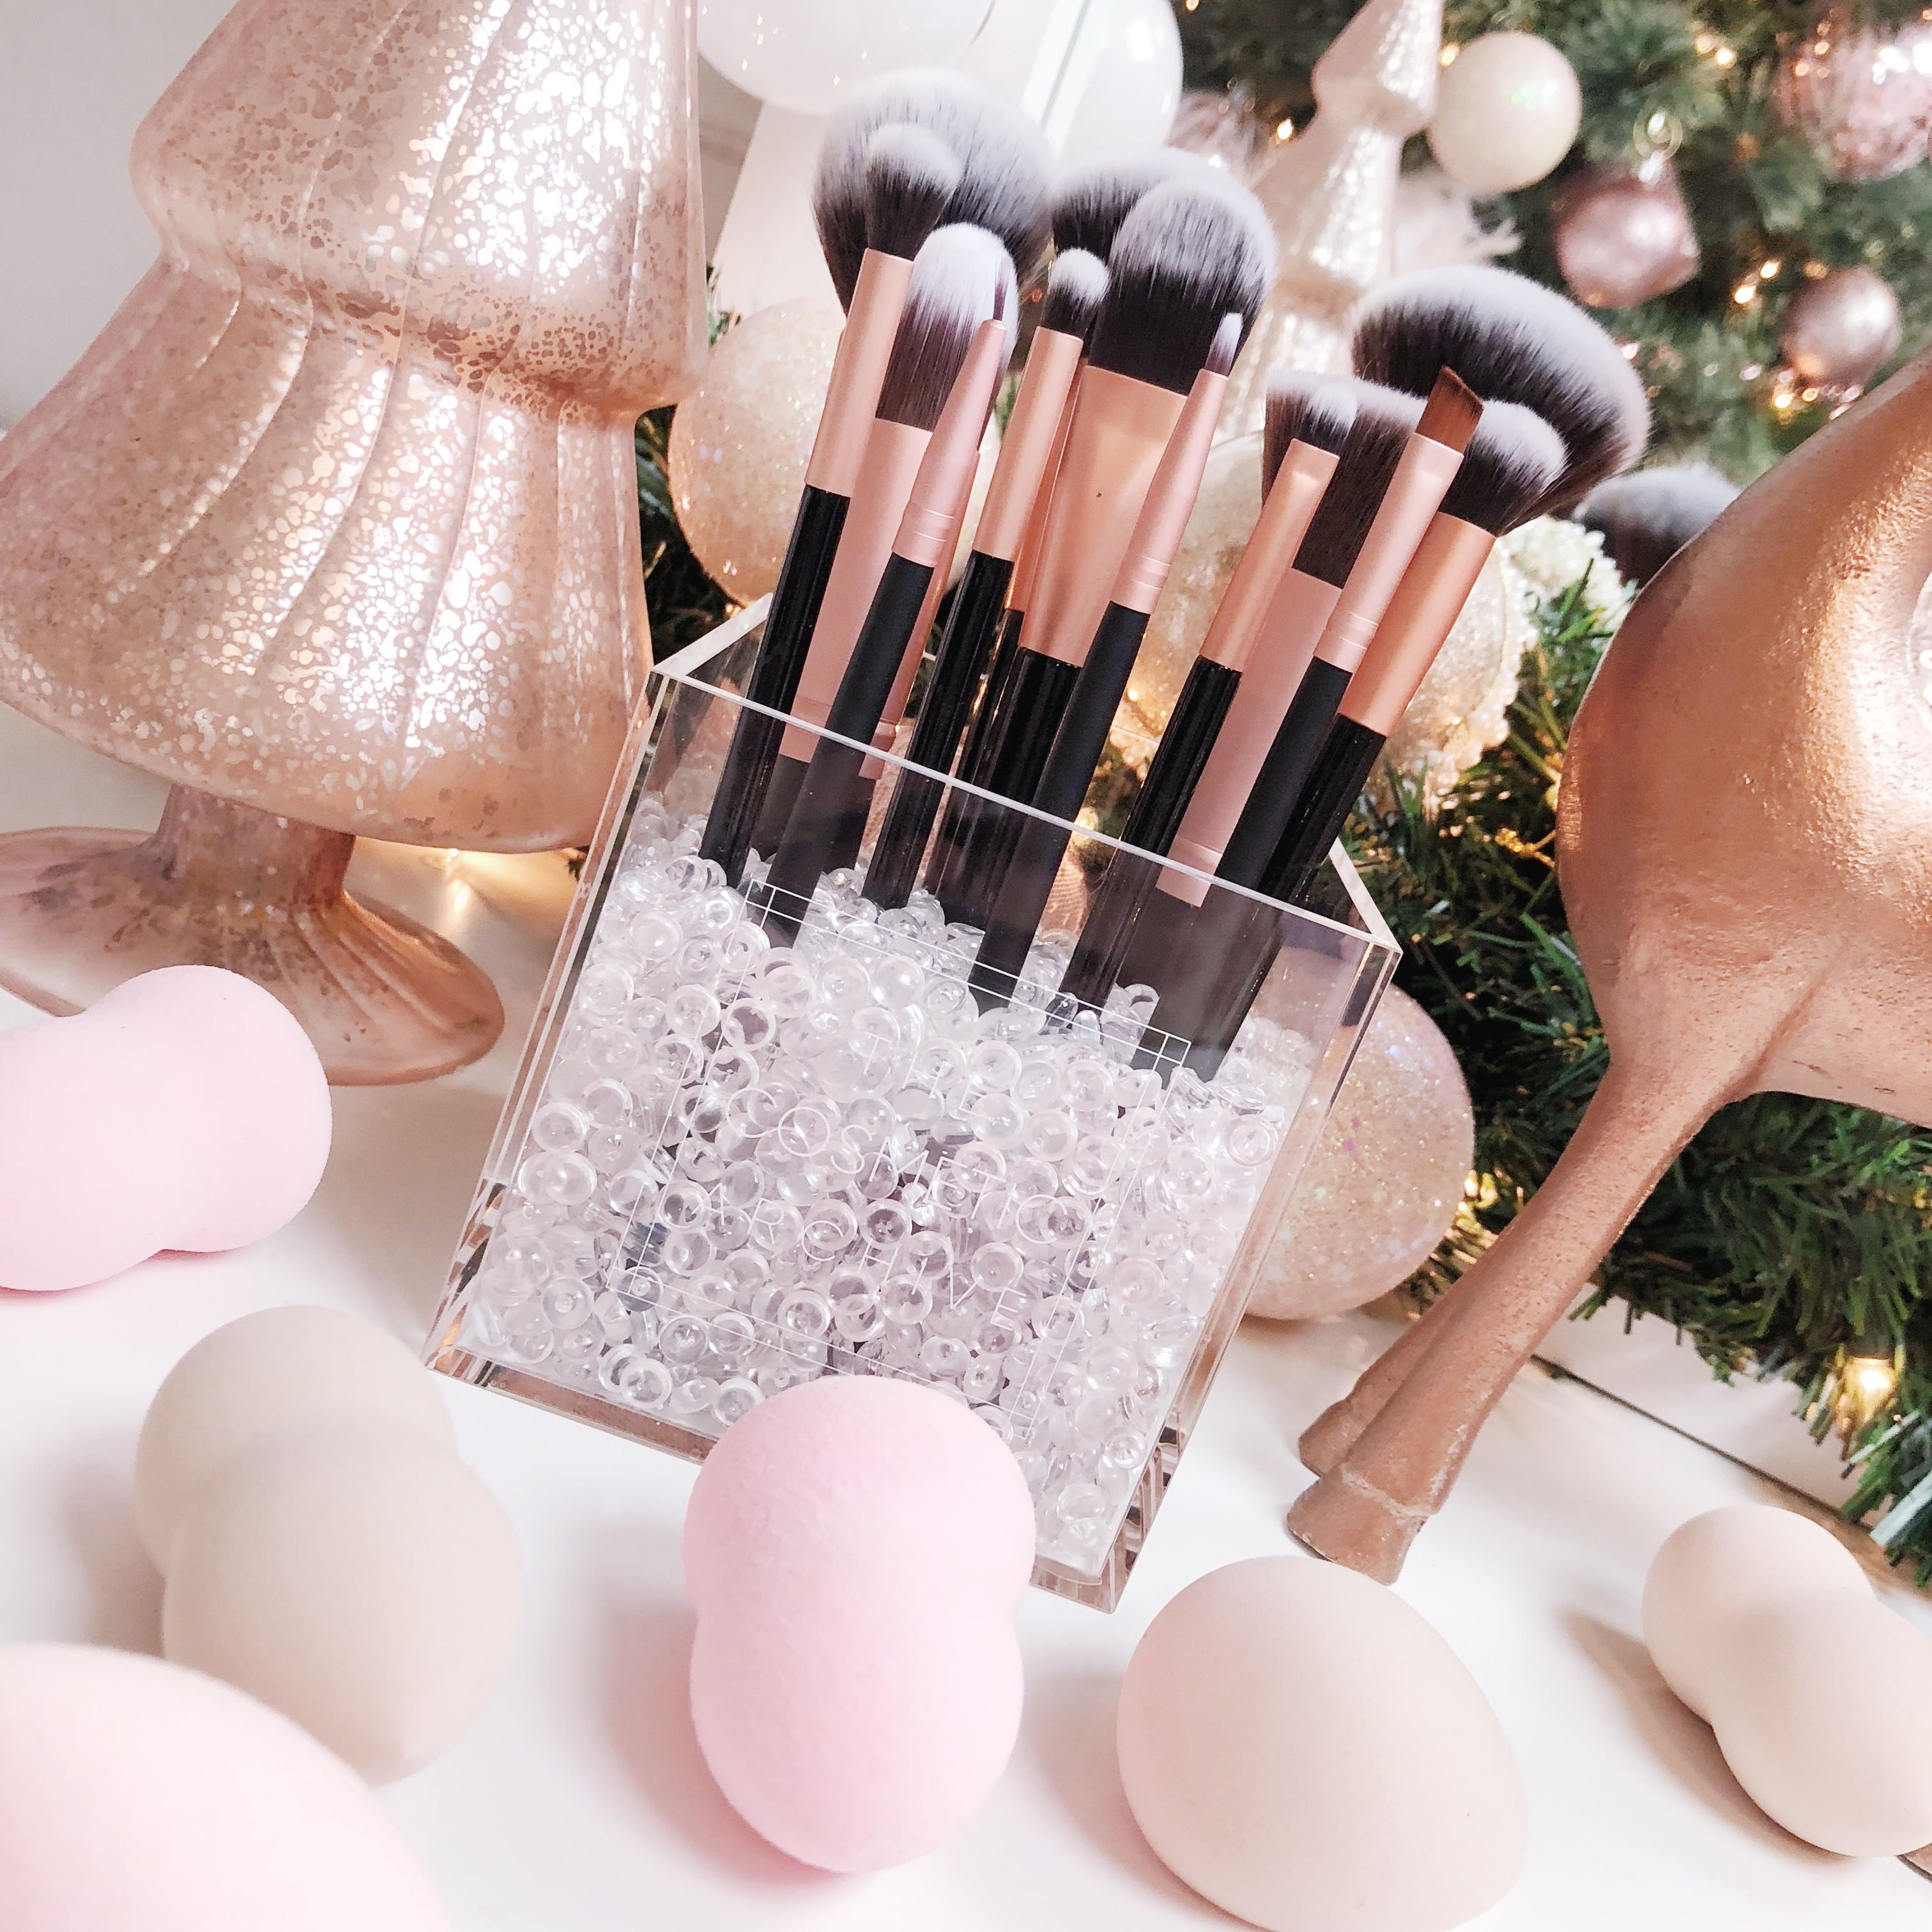 19 makeup Brushes design ideas